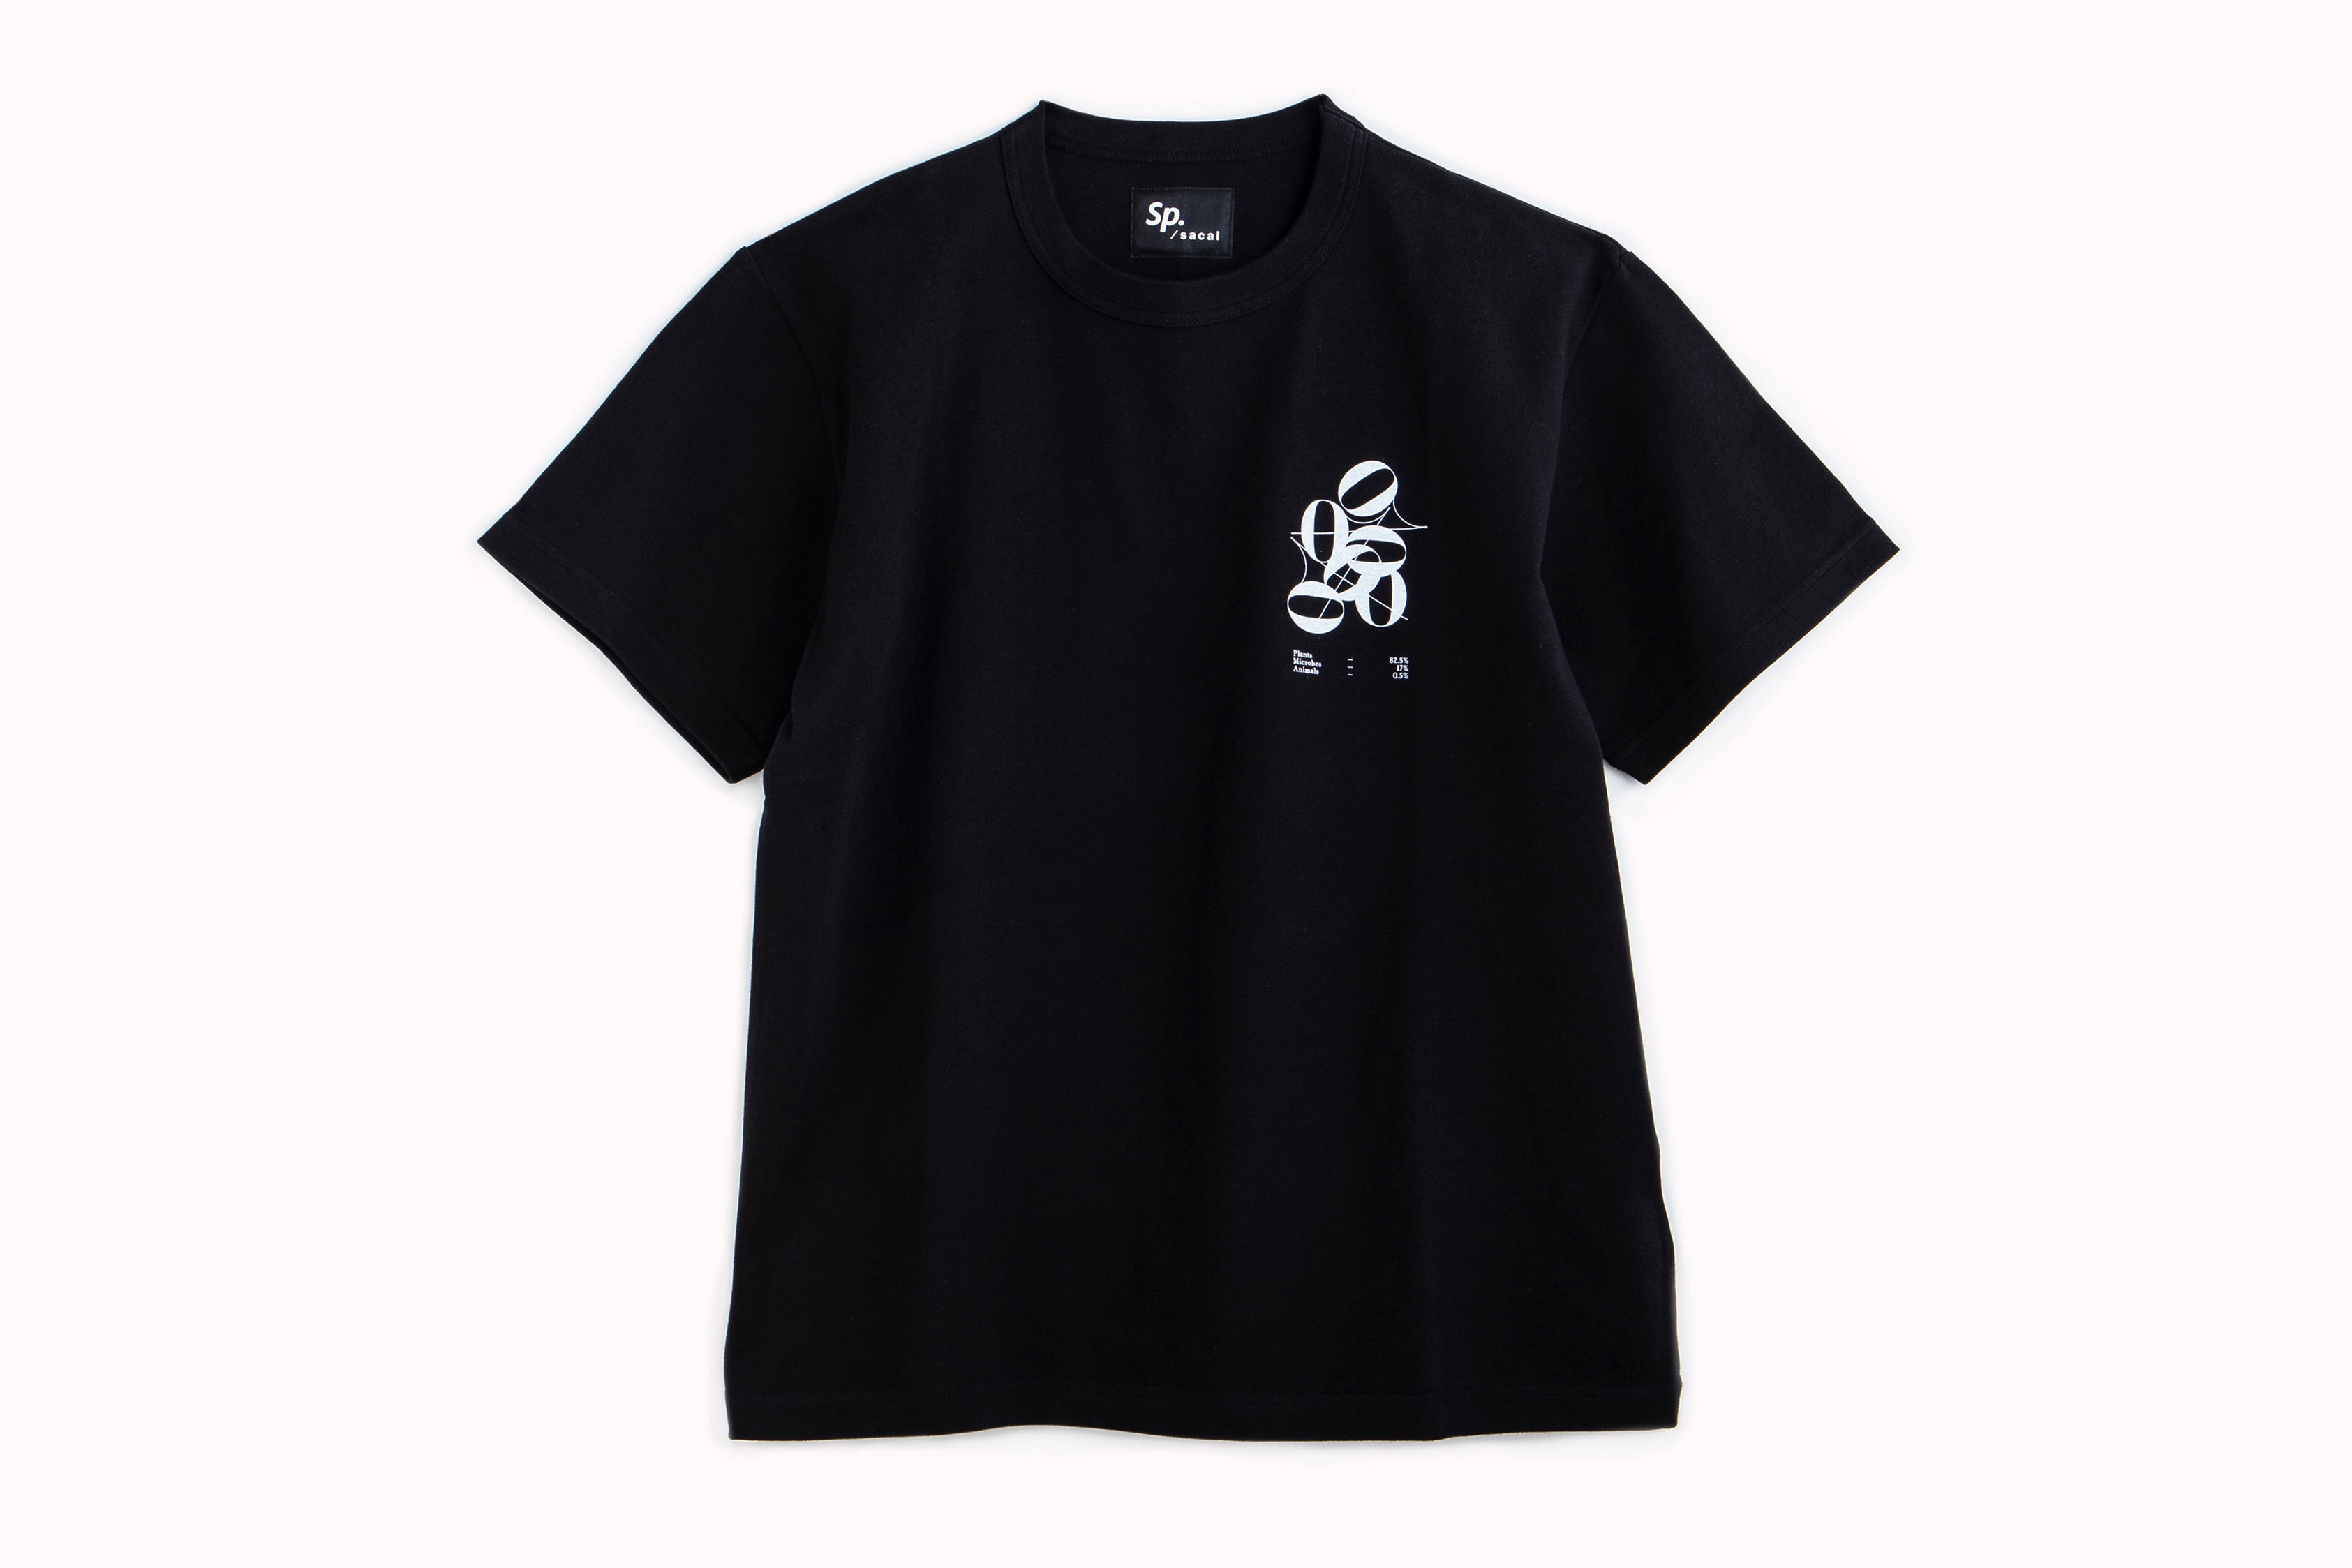 sacai x Spiber 合作款 T-Shirt 即将发售